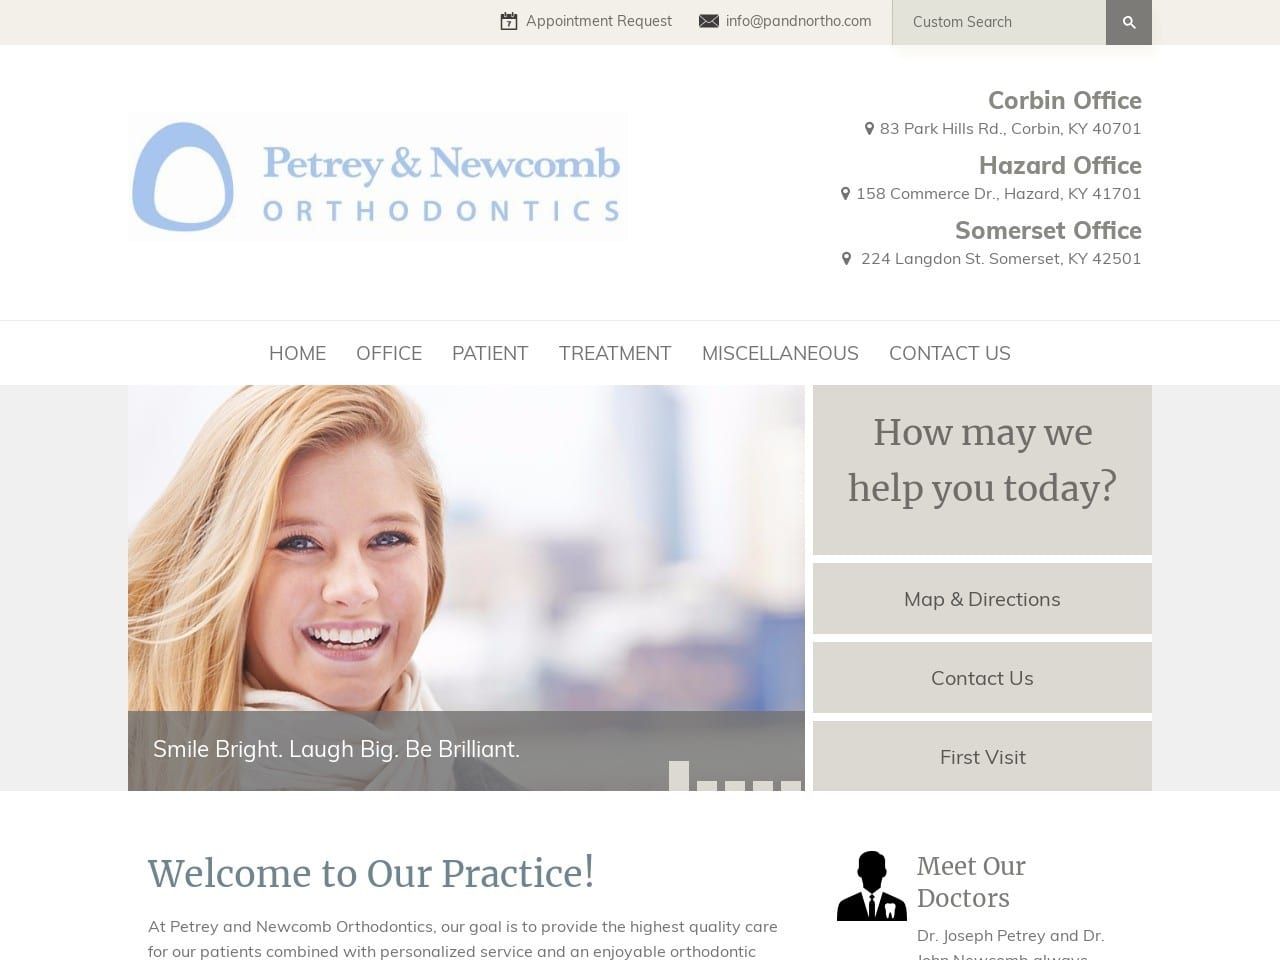 Petrey Orthodontics Website Screenshot from pandnortho.com